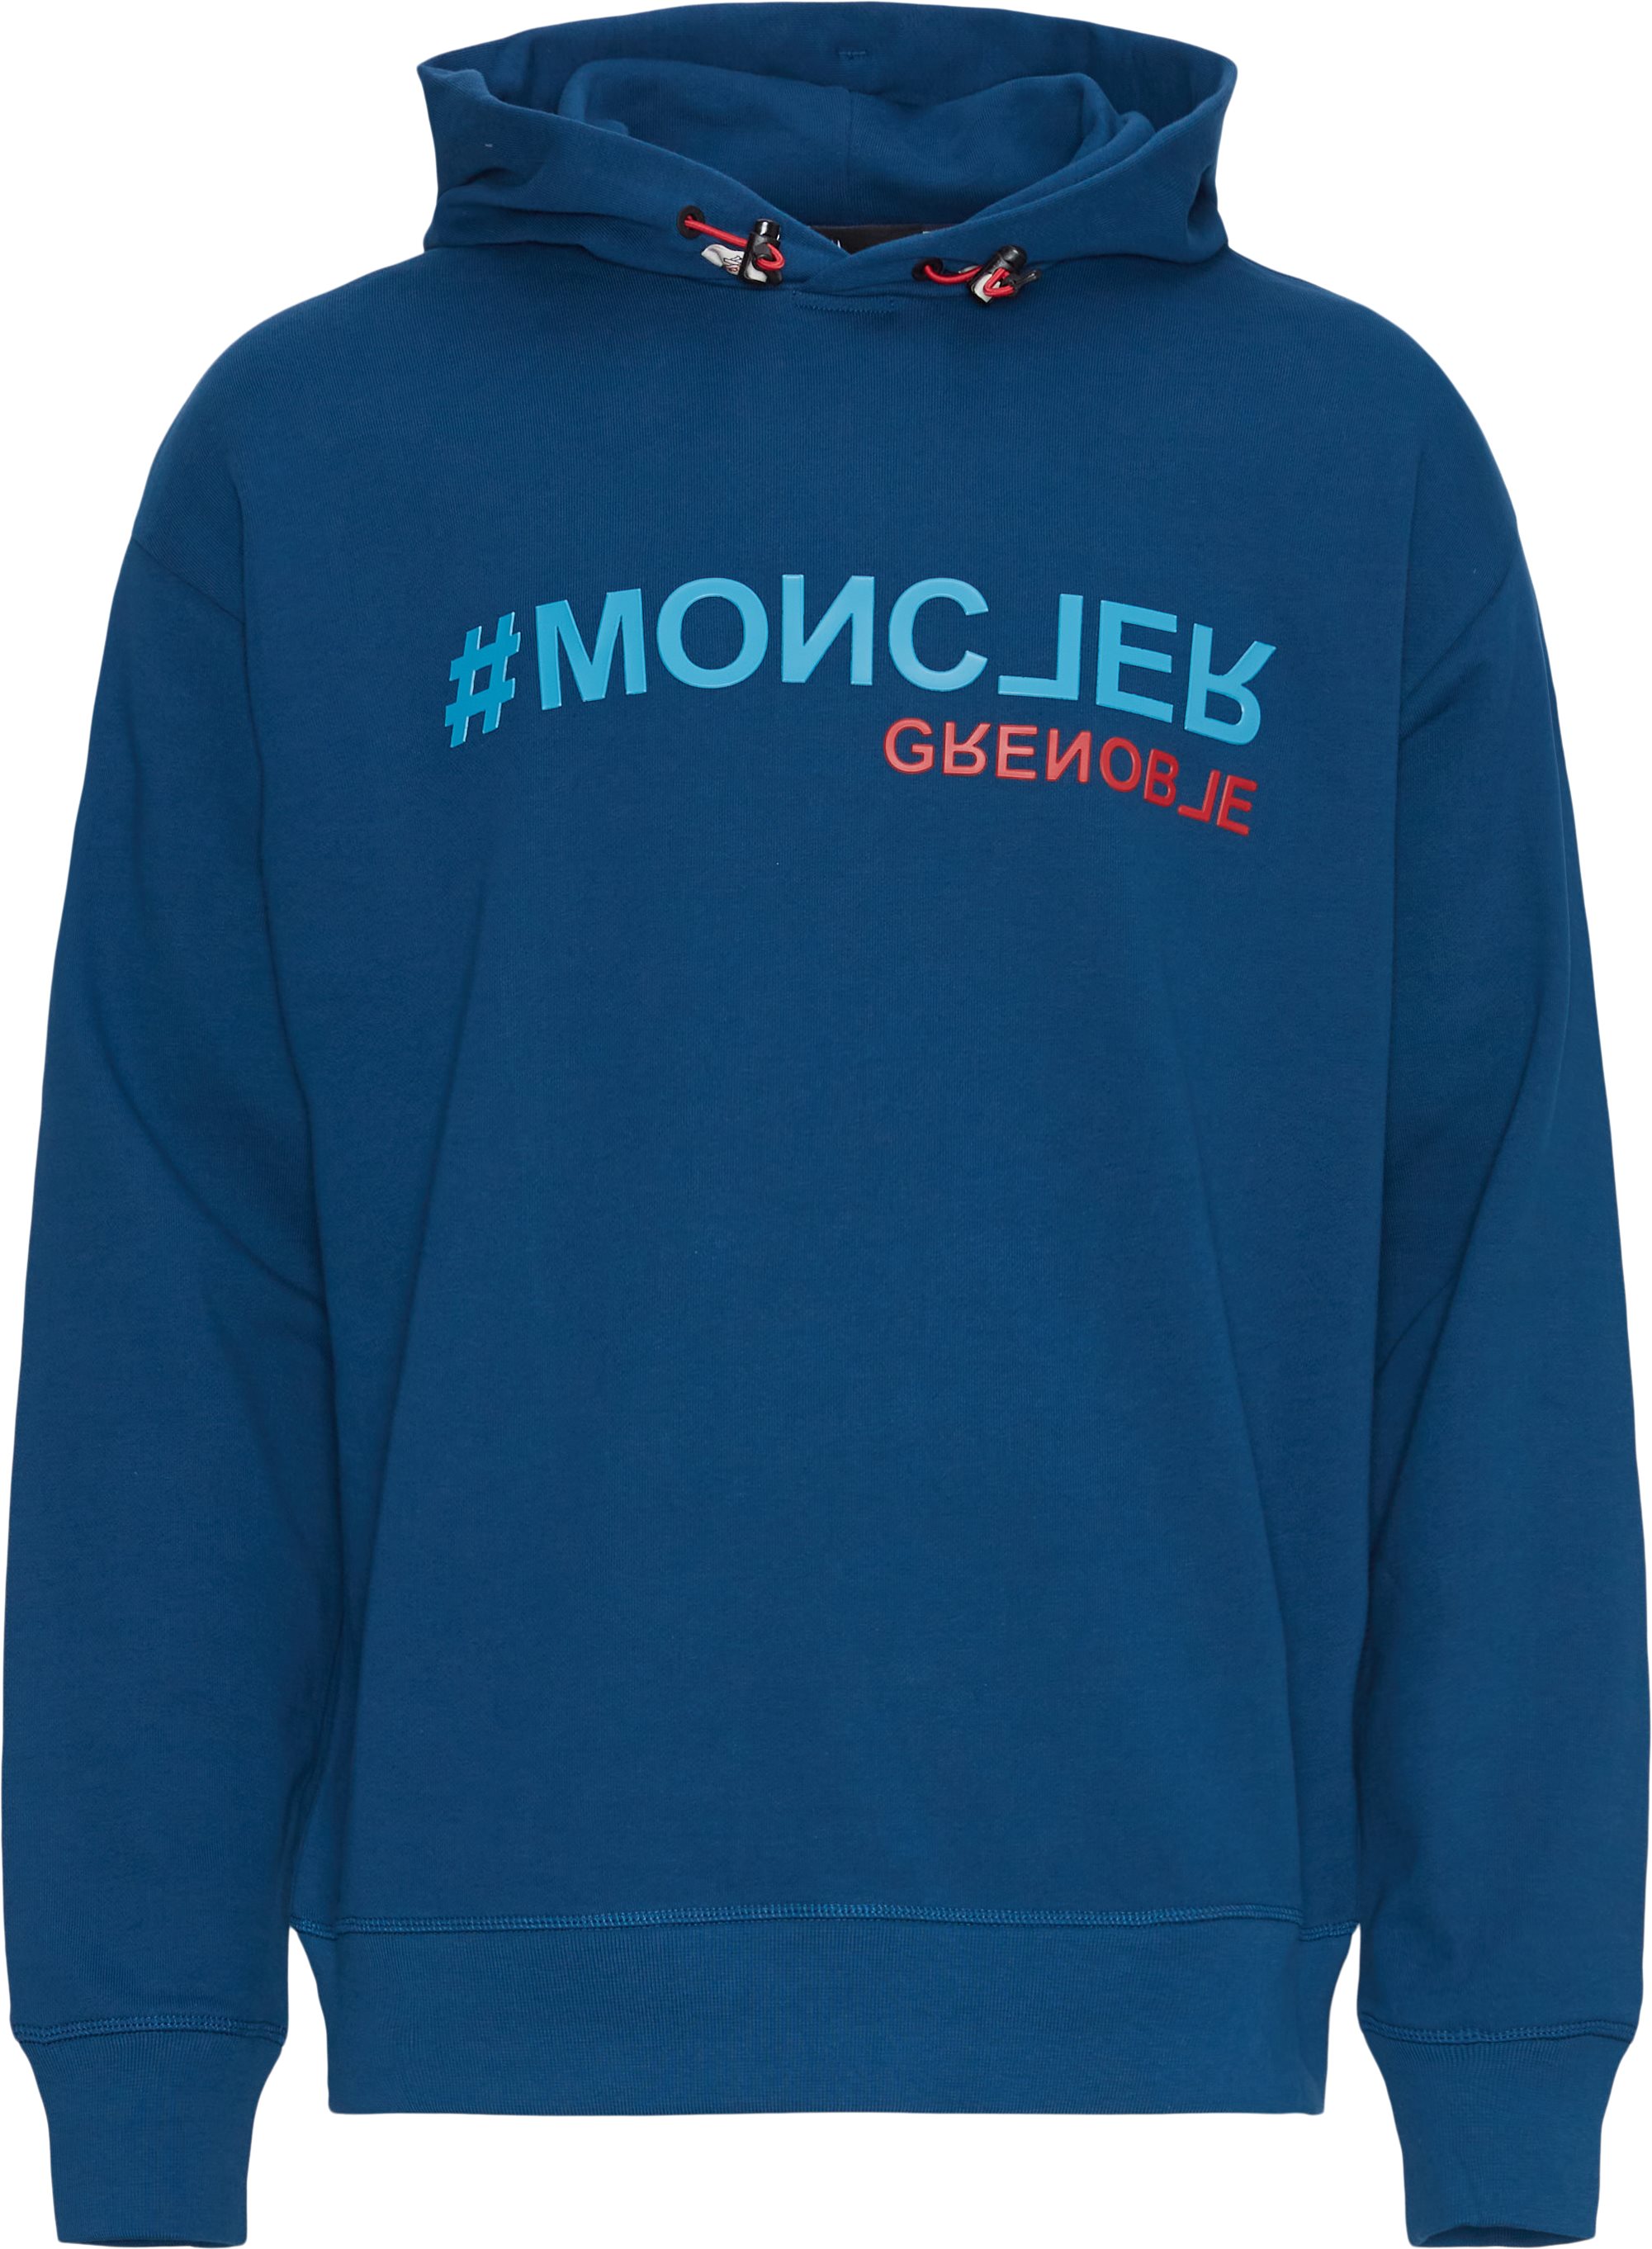 Moncler Grenoble Sweatshirts 8G00010 8098U Blå